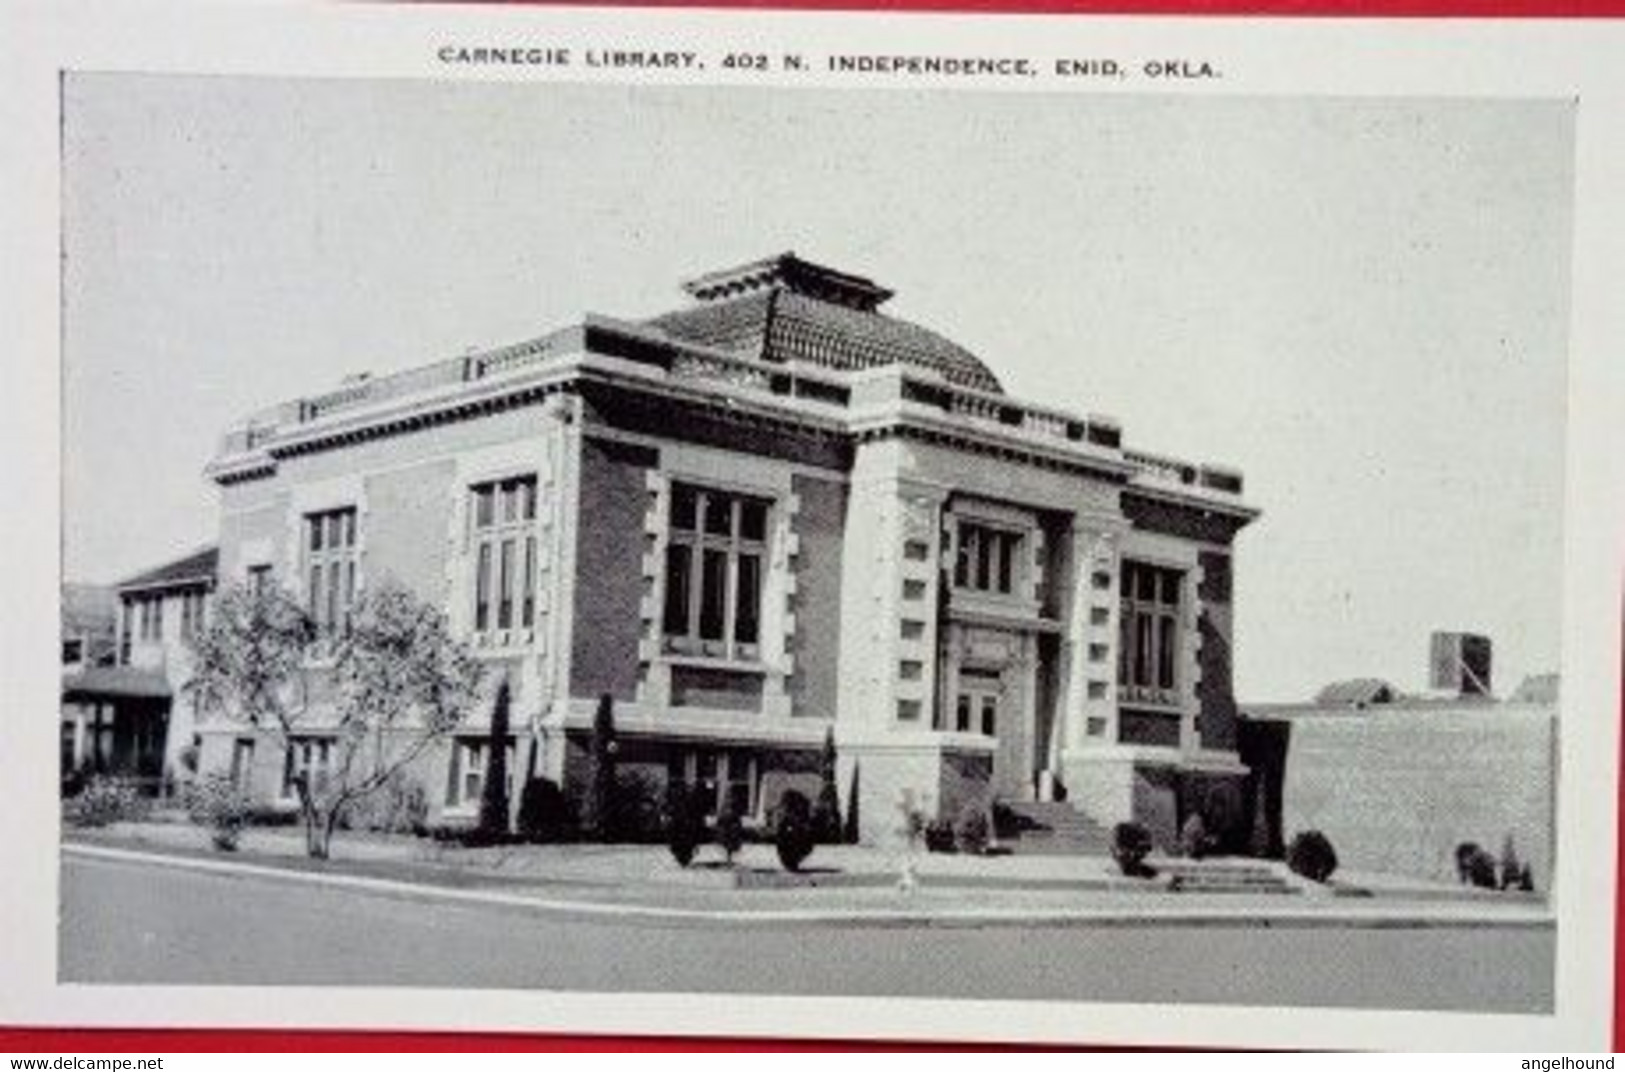 Carnegie Library - Enid